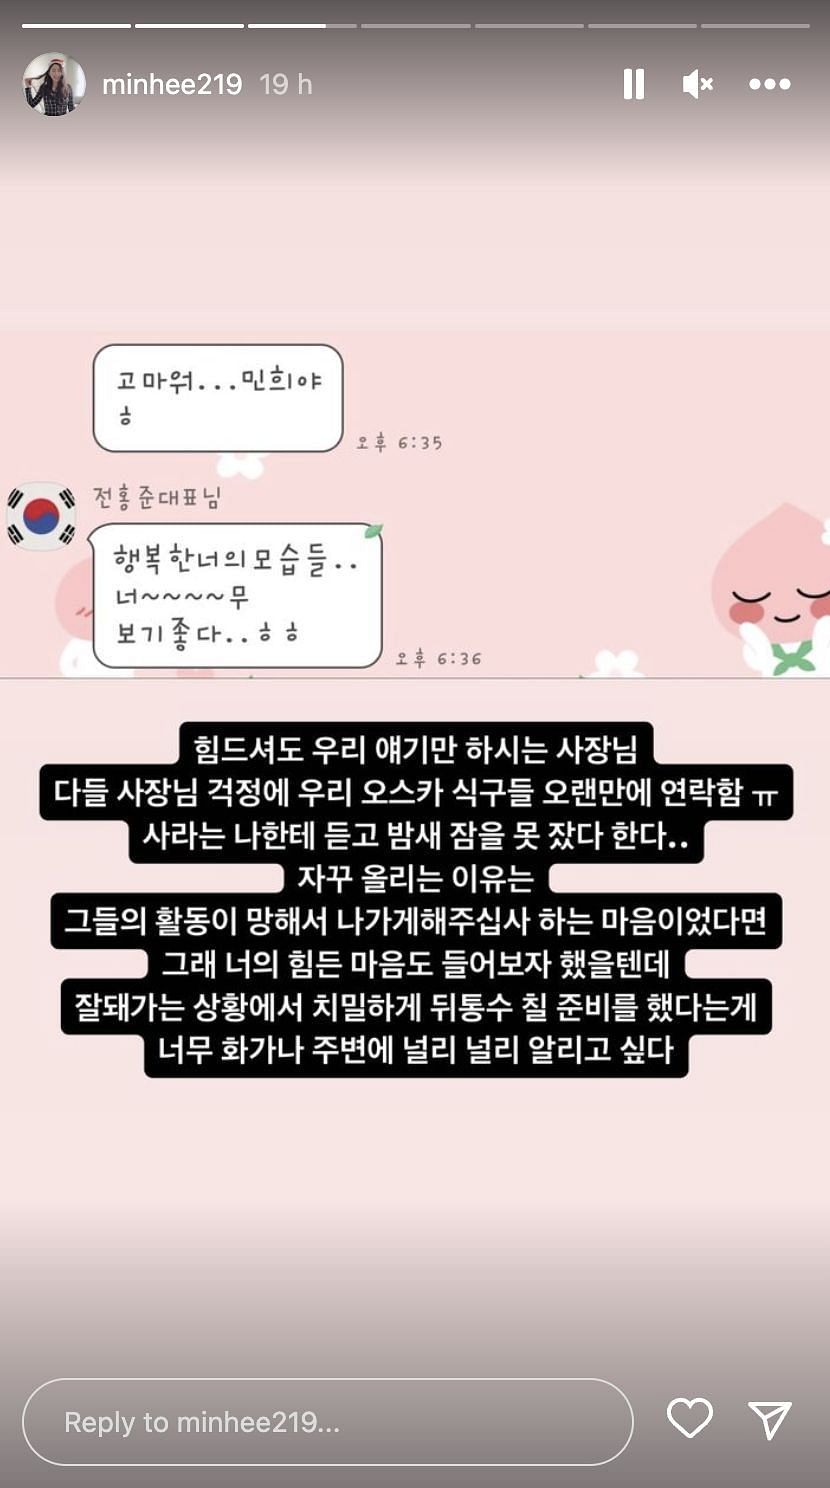 Kim Min-hee&#039;s note (Image via Instagram/@minhee219)